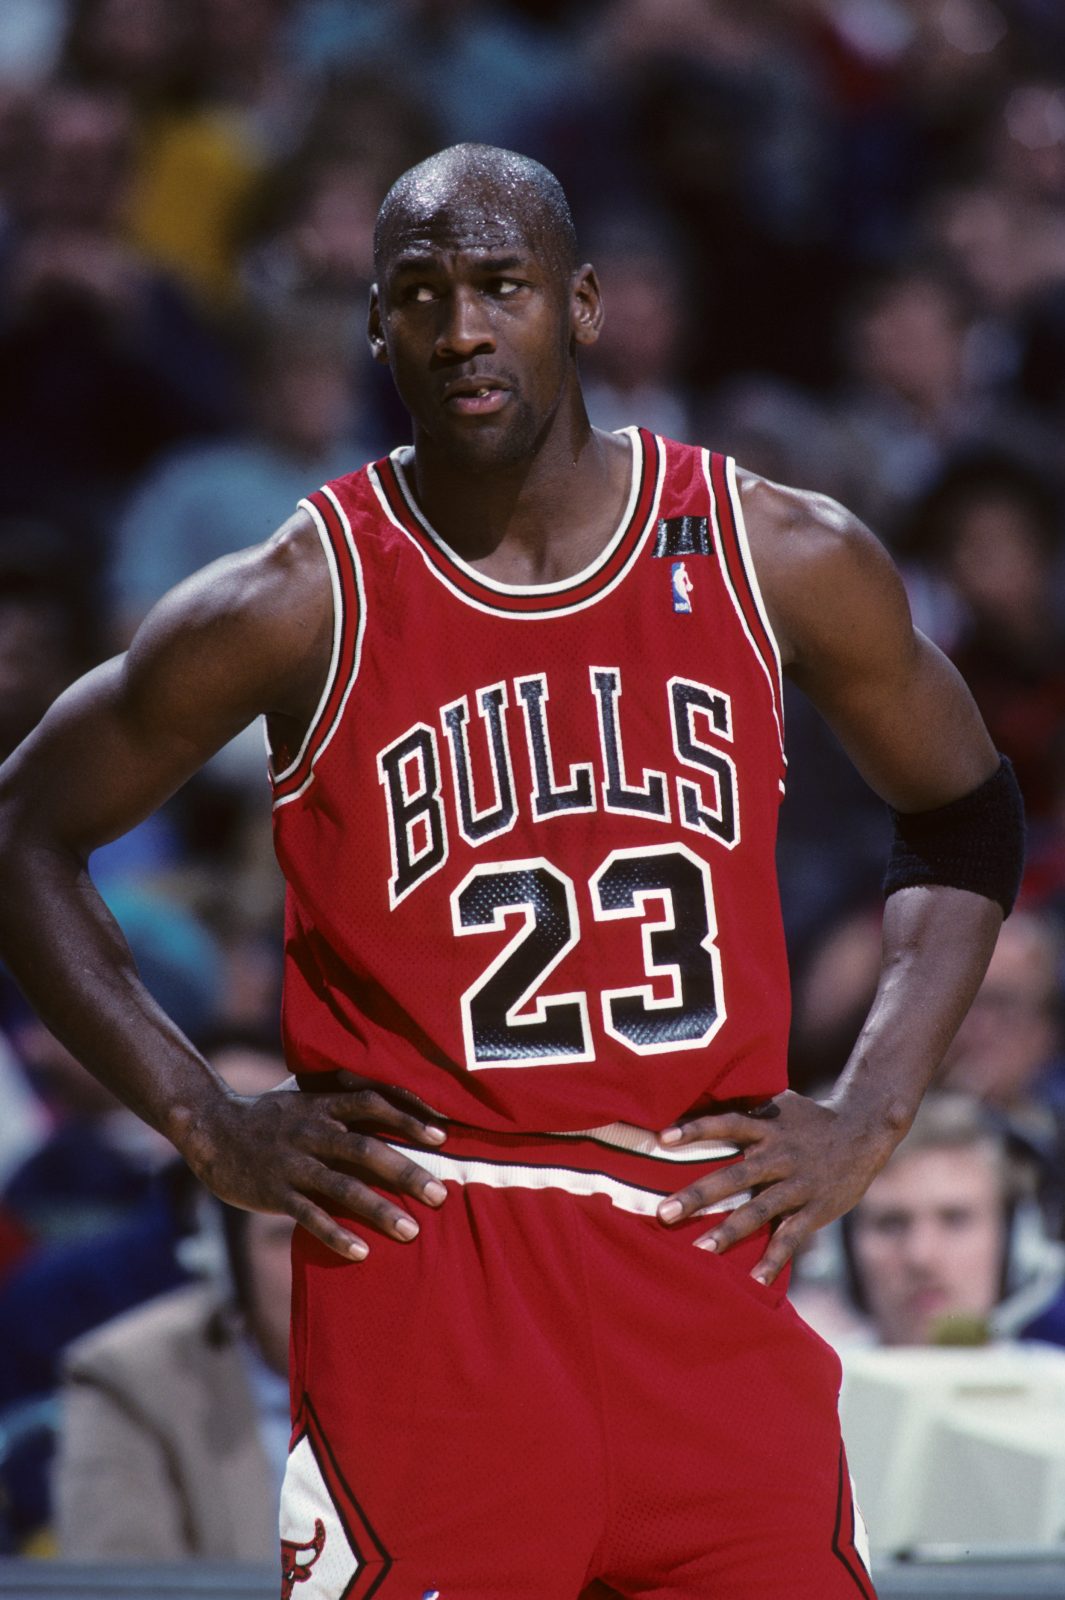 Michael Jordan Hall of Fame player for the Chicago Bulls